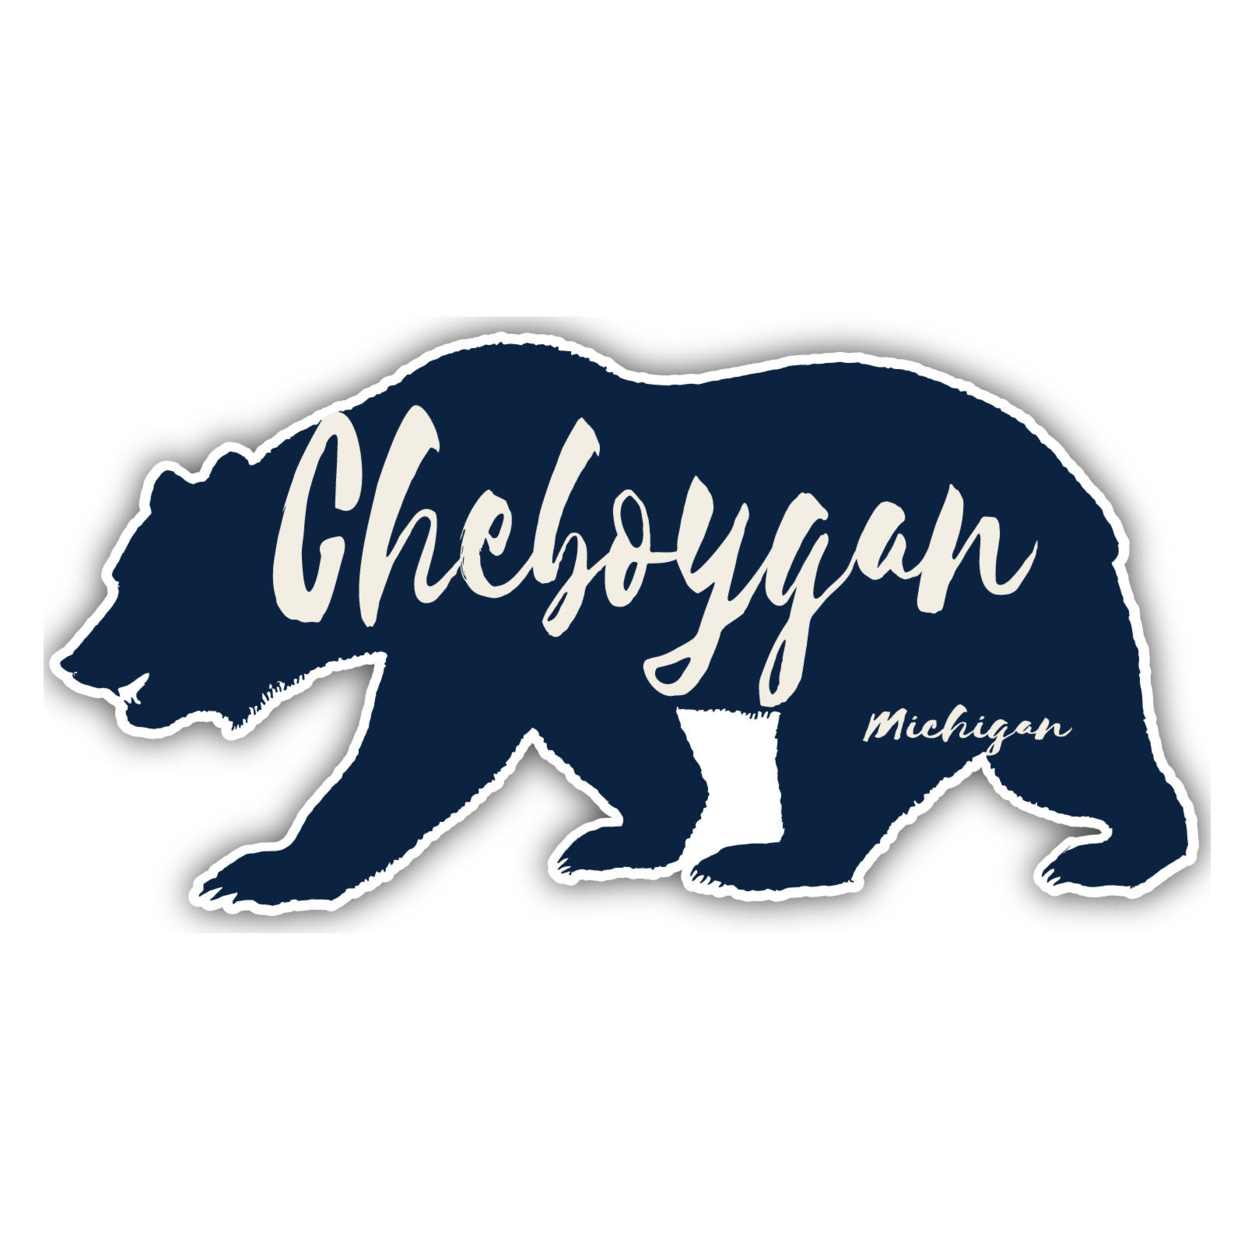 Cheboygan Michigan Souvenir Decorative Stickers (Choose Theme And Size) - Single Unit, 4-Inch, Great Outdoors